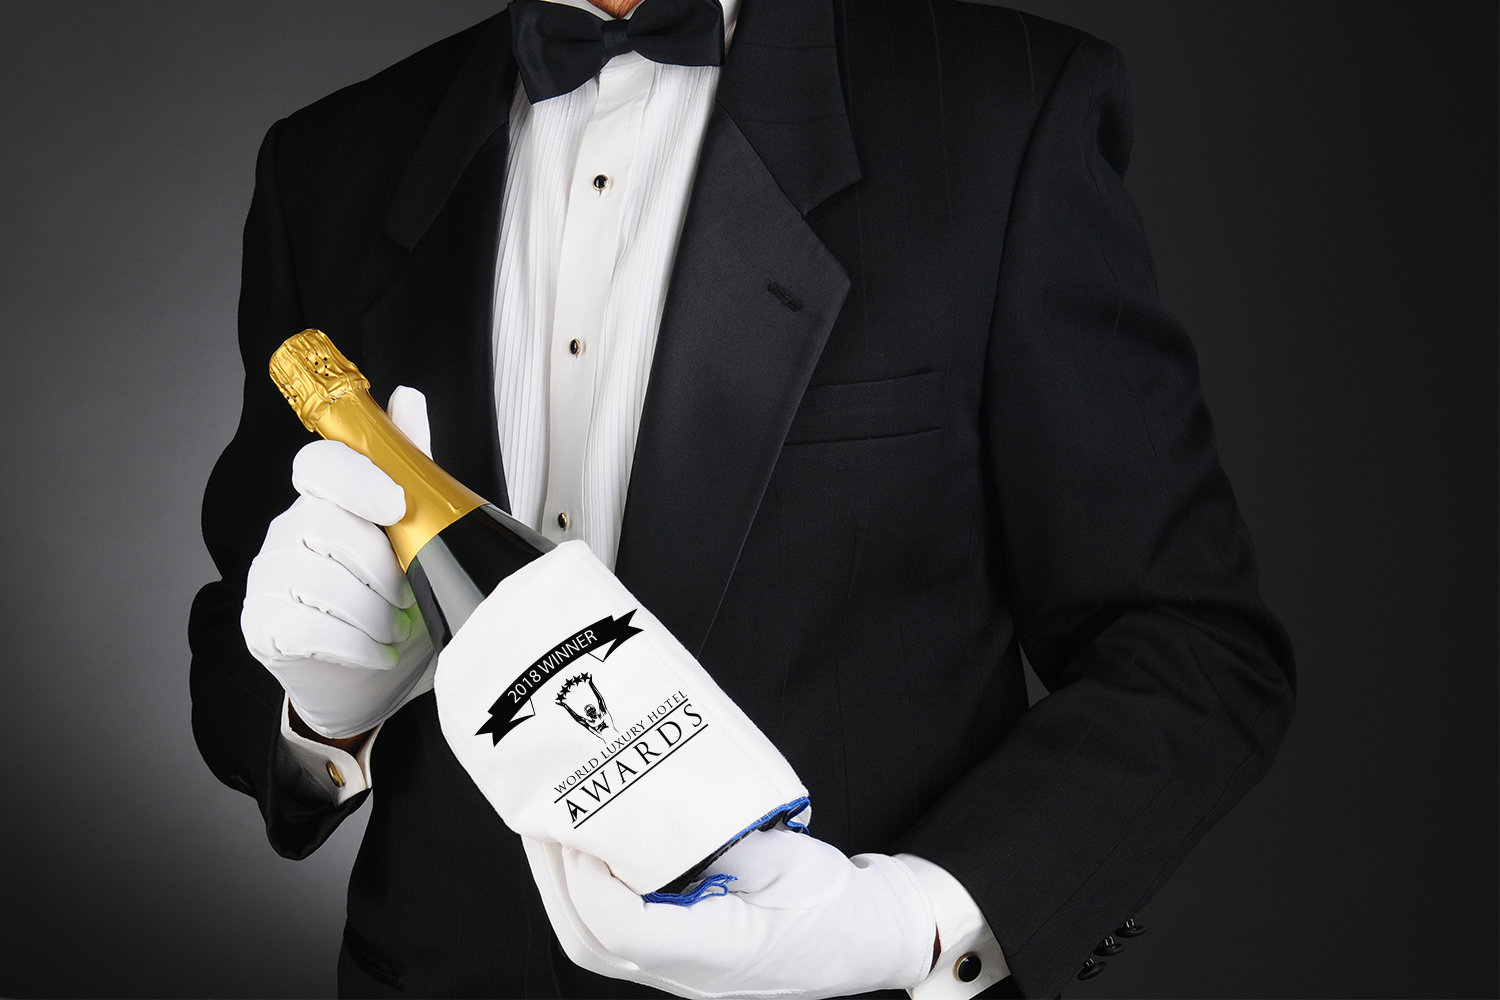 Sommelier collection. Официант в белых перчатках. Официант наливает шампанское. Сомелье шампанское. Бутылка шампанское сомелье.